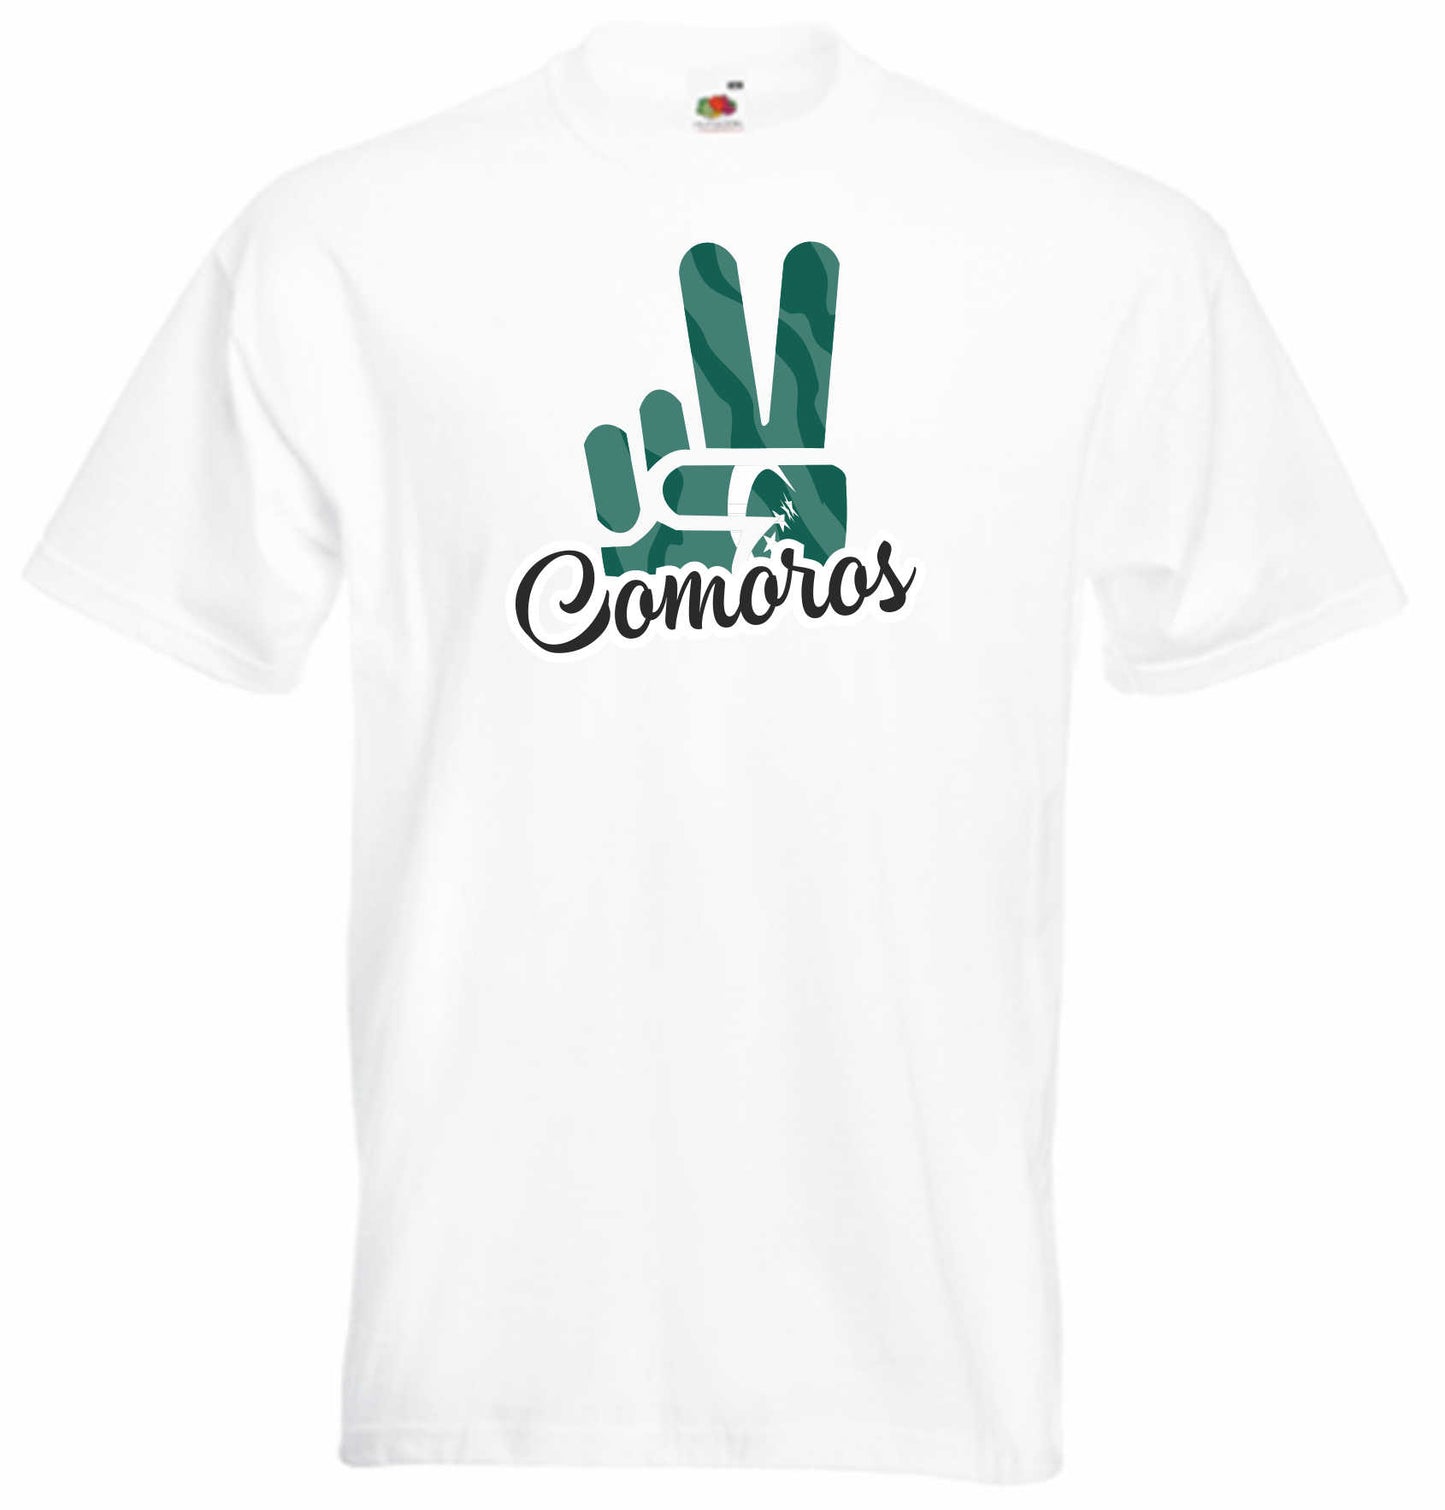 T-Shirt Herren - Victory - Flagge / Fahne - Comoros - Sieg